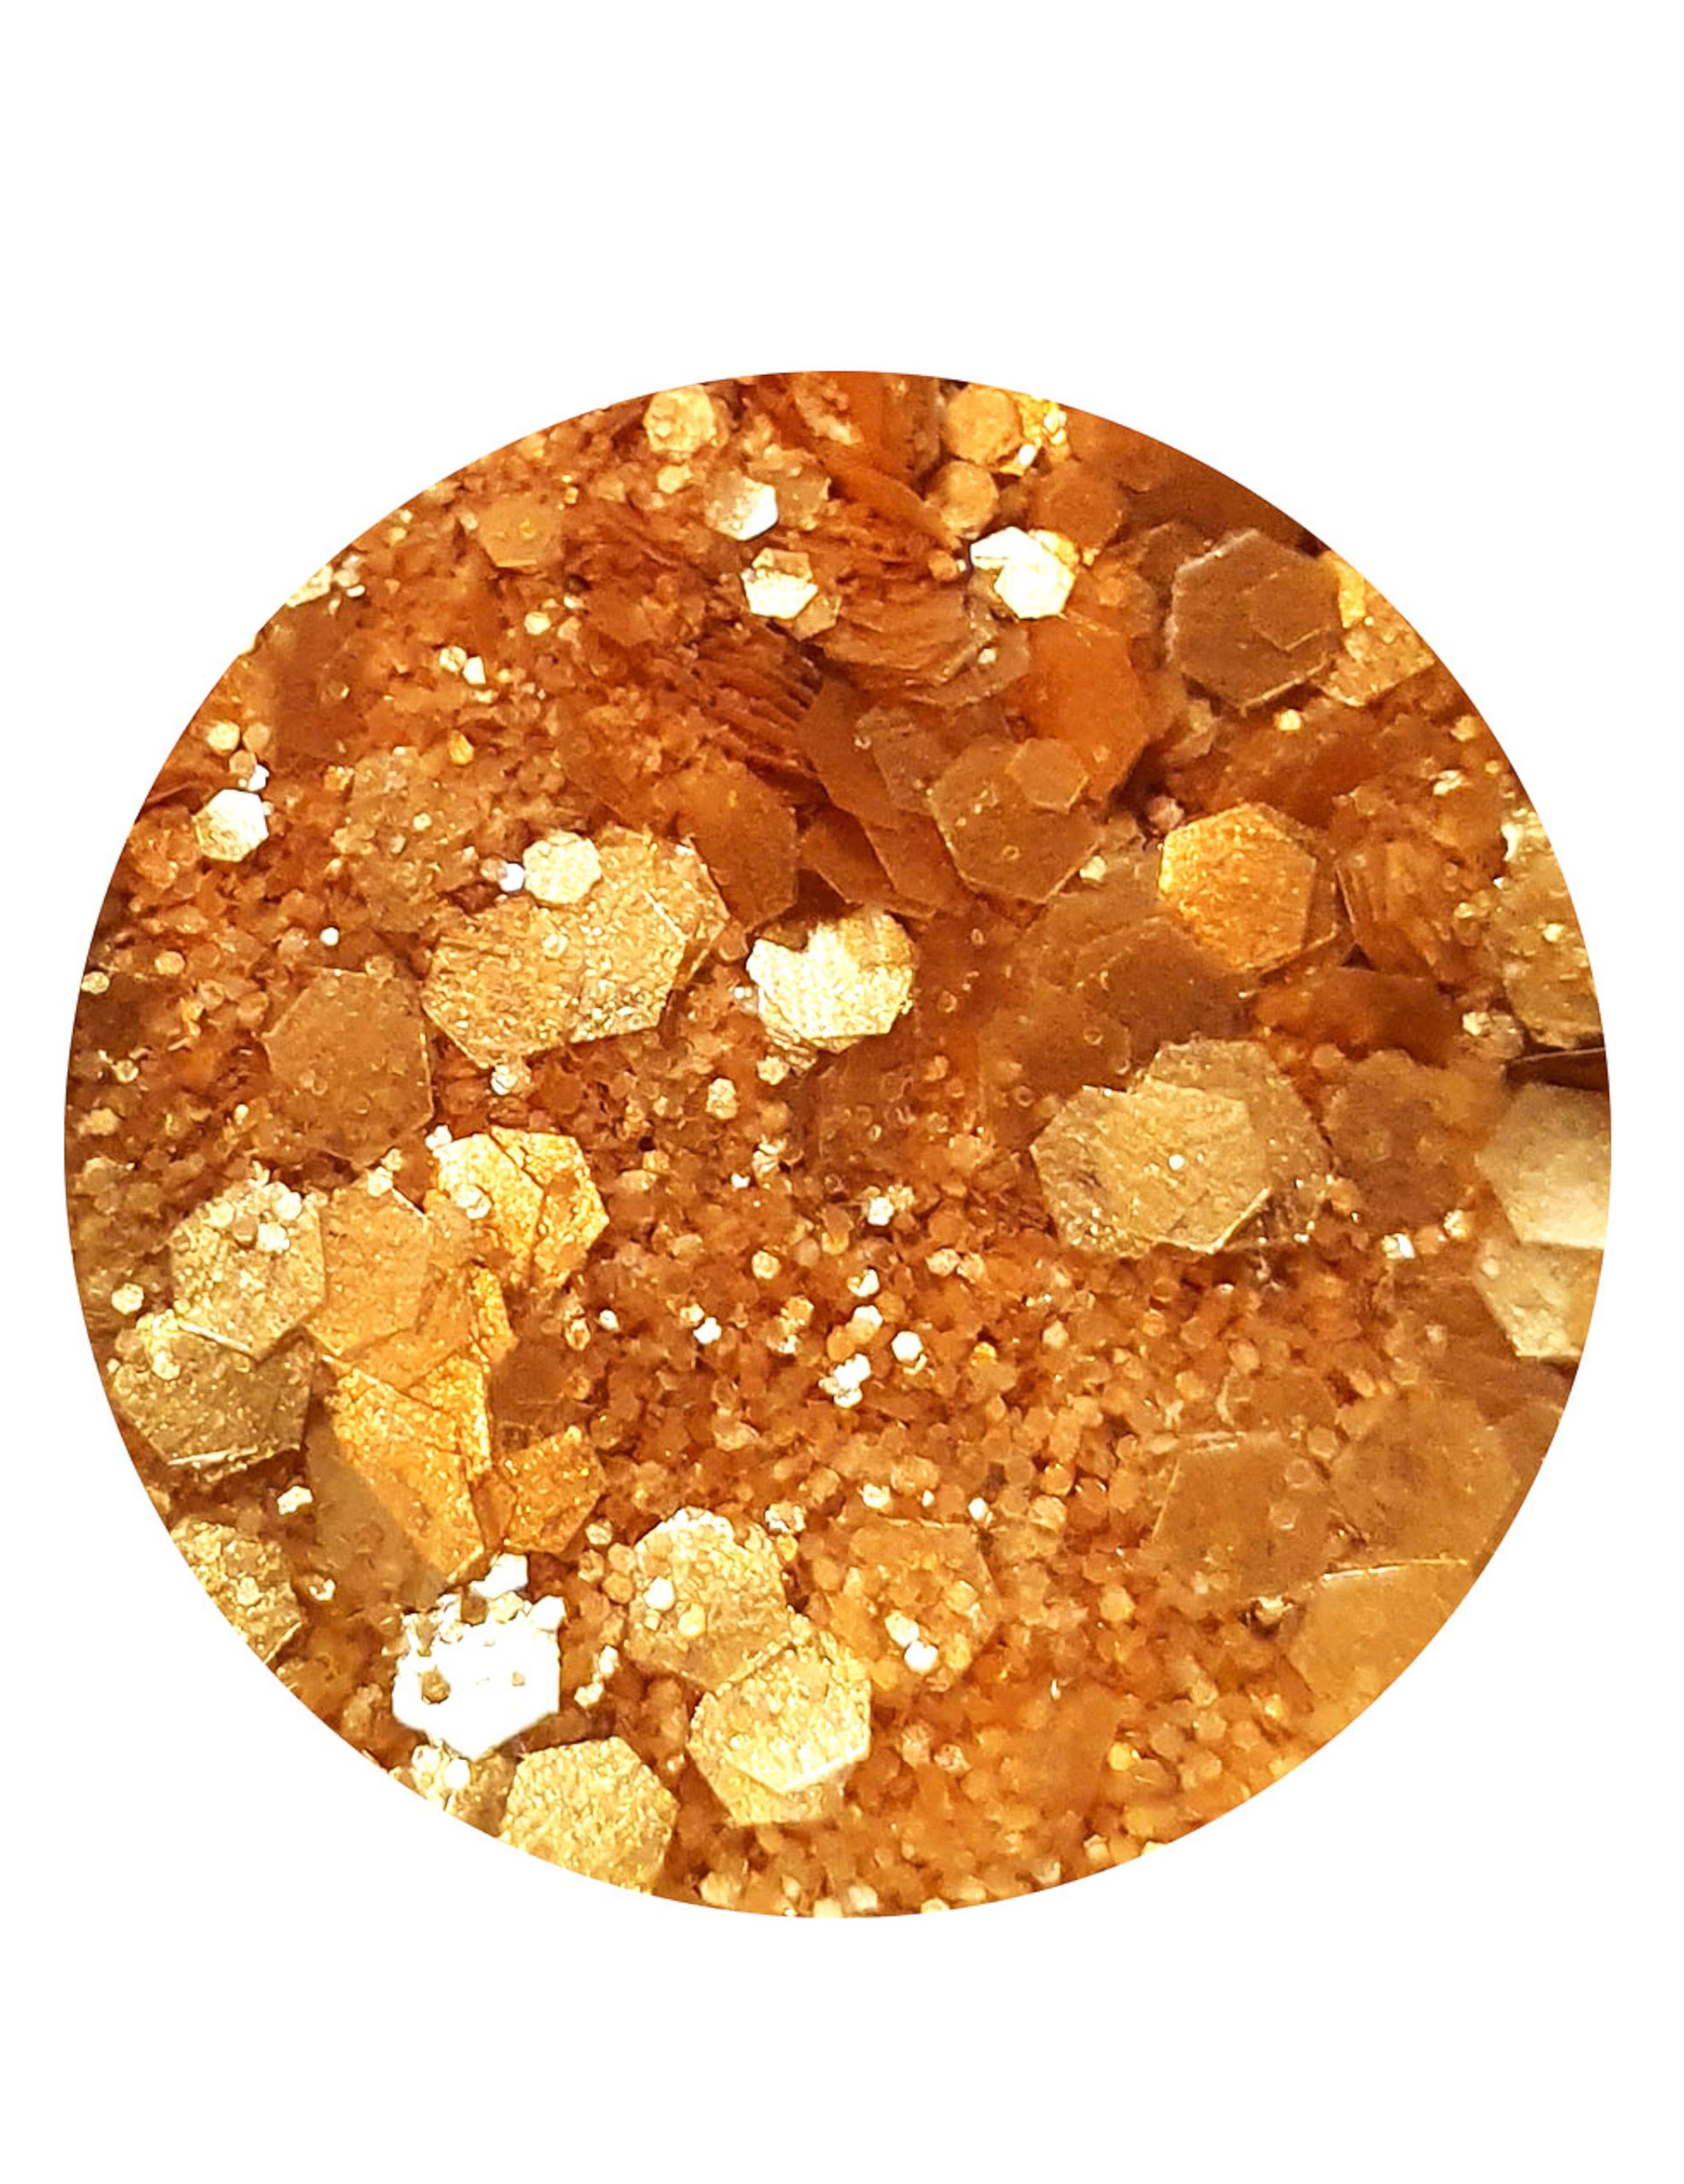 Make-Up Glitter karamel-gold von SI SI LA PAILLETTE